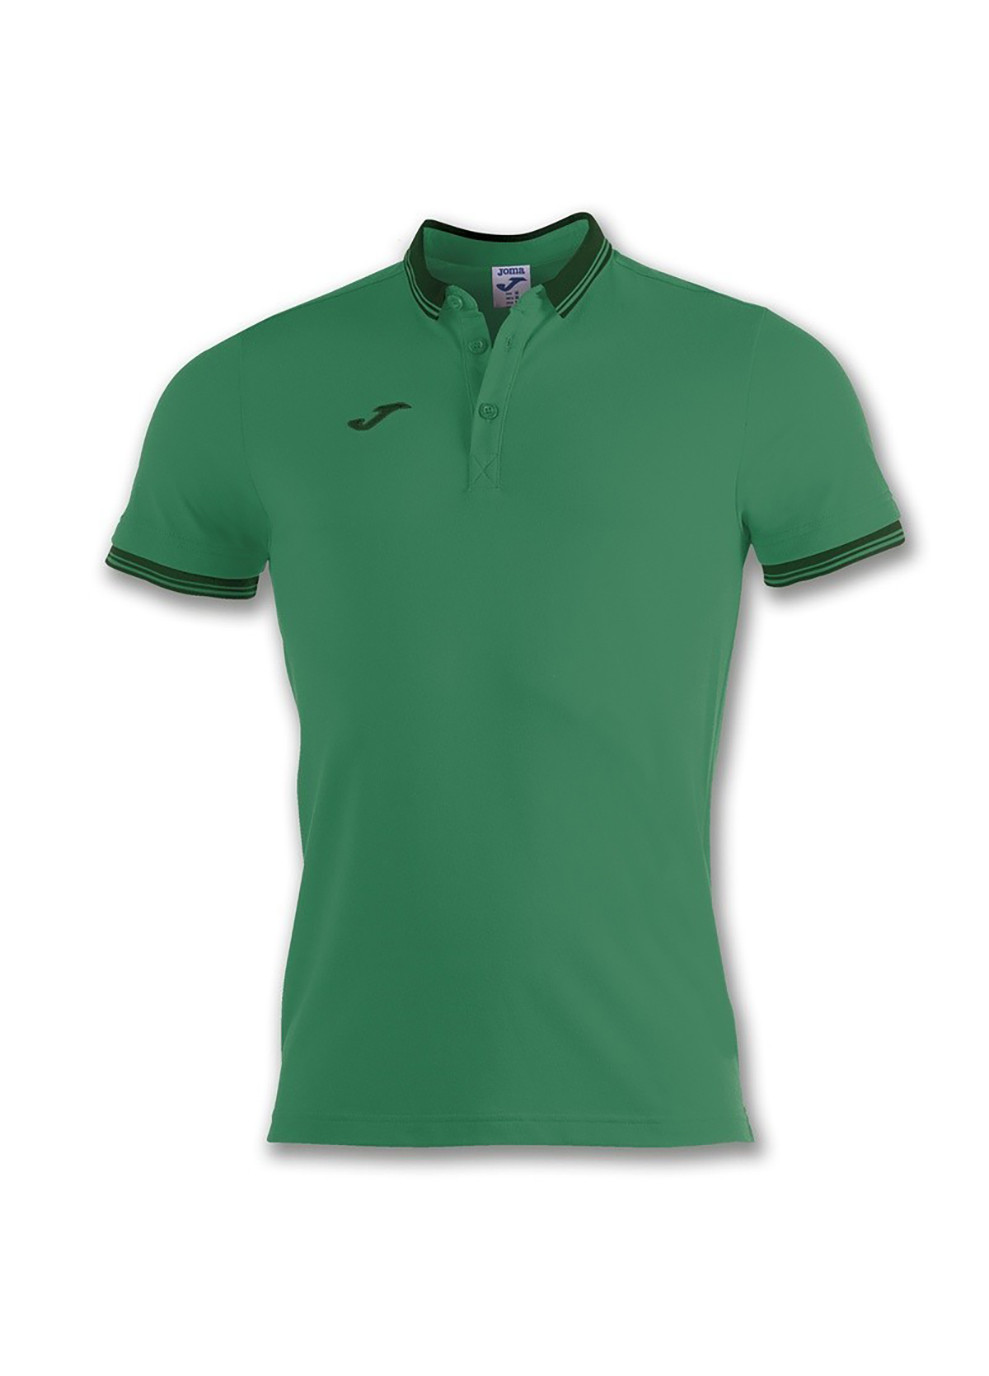 Зеленая футболка-поло polo shirt bali ii green s/s зеленый для мужчин Joma